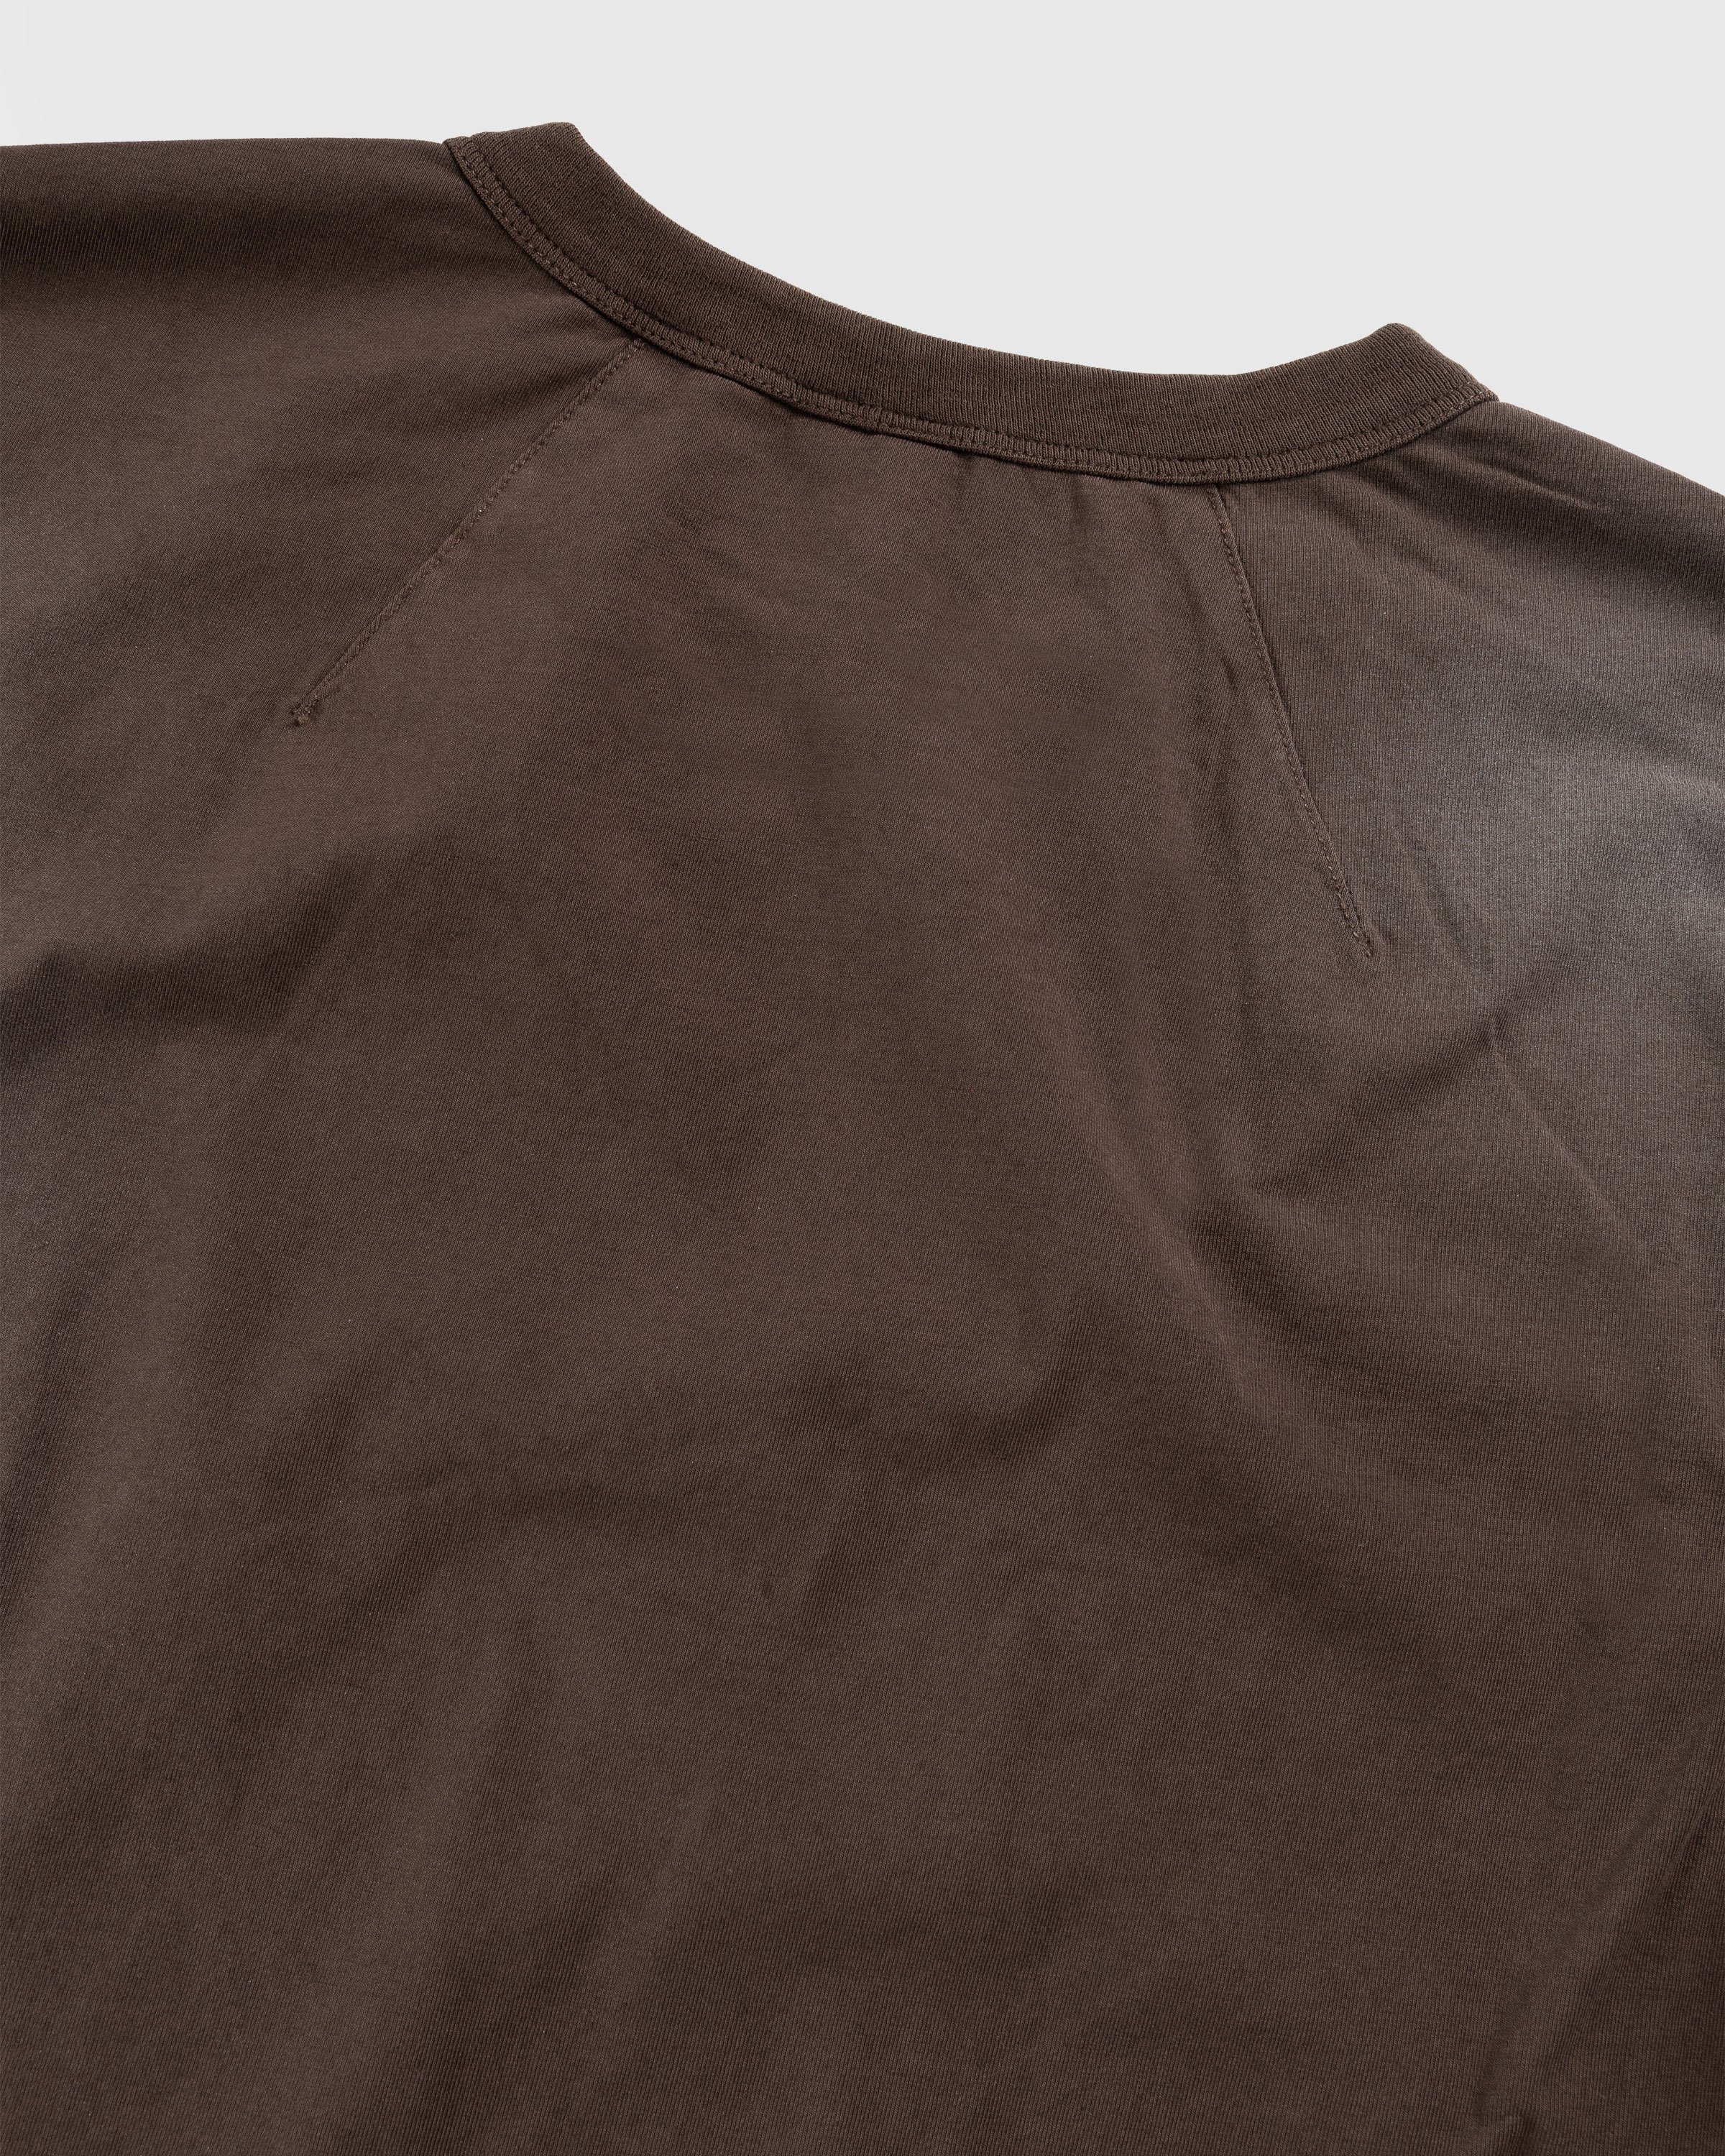 Entire Studios - Primer Longsleeve Brunette - Clothing - Brown - Image 6